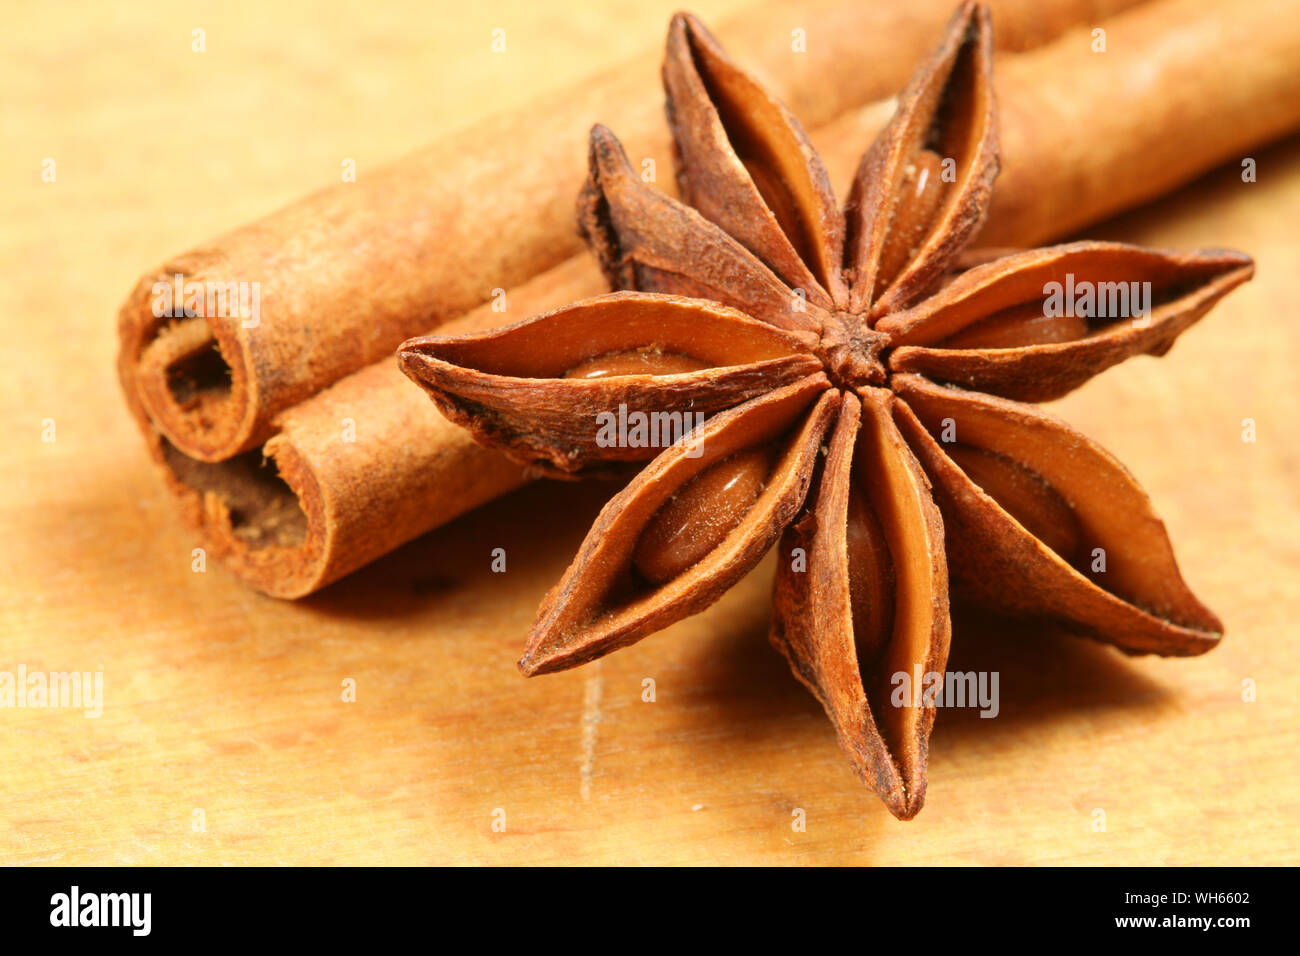 Star anise and cinnamon stick - closeup Stock Photo